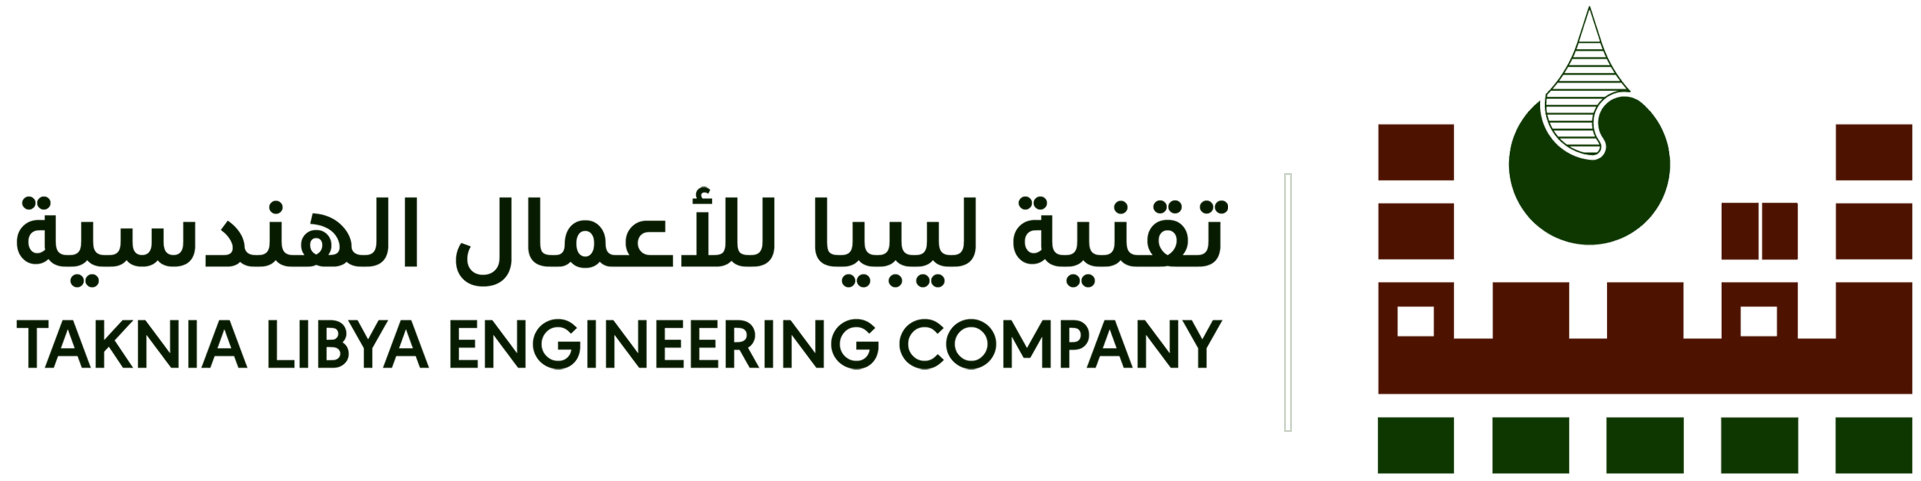 taknia libya logo